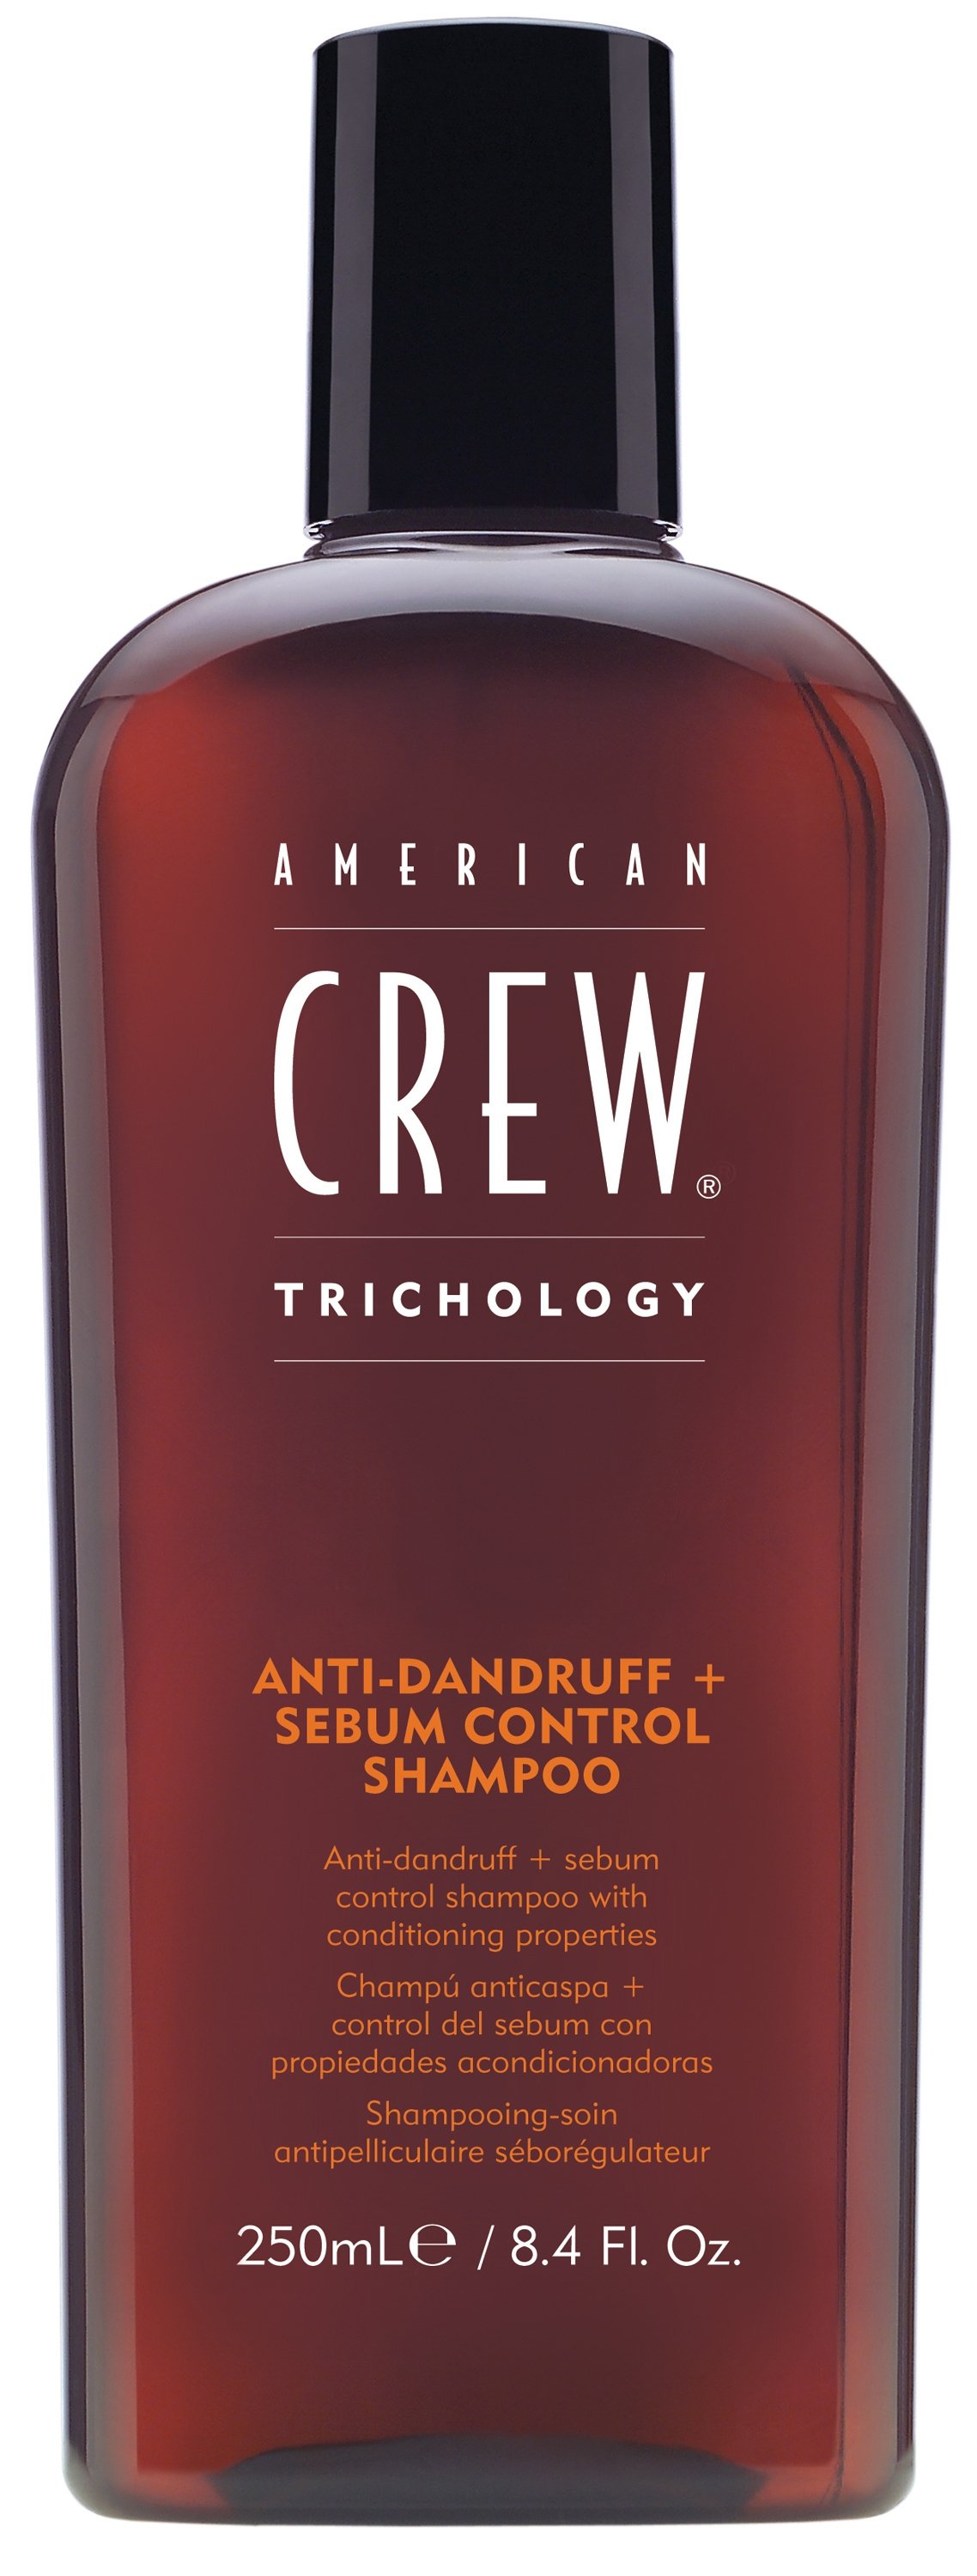 Мужские шампуни:  AMERICAN CREW -  Шампунь против перхоти American Crew Anti-Dandruff (250 мл) (250 мл)